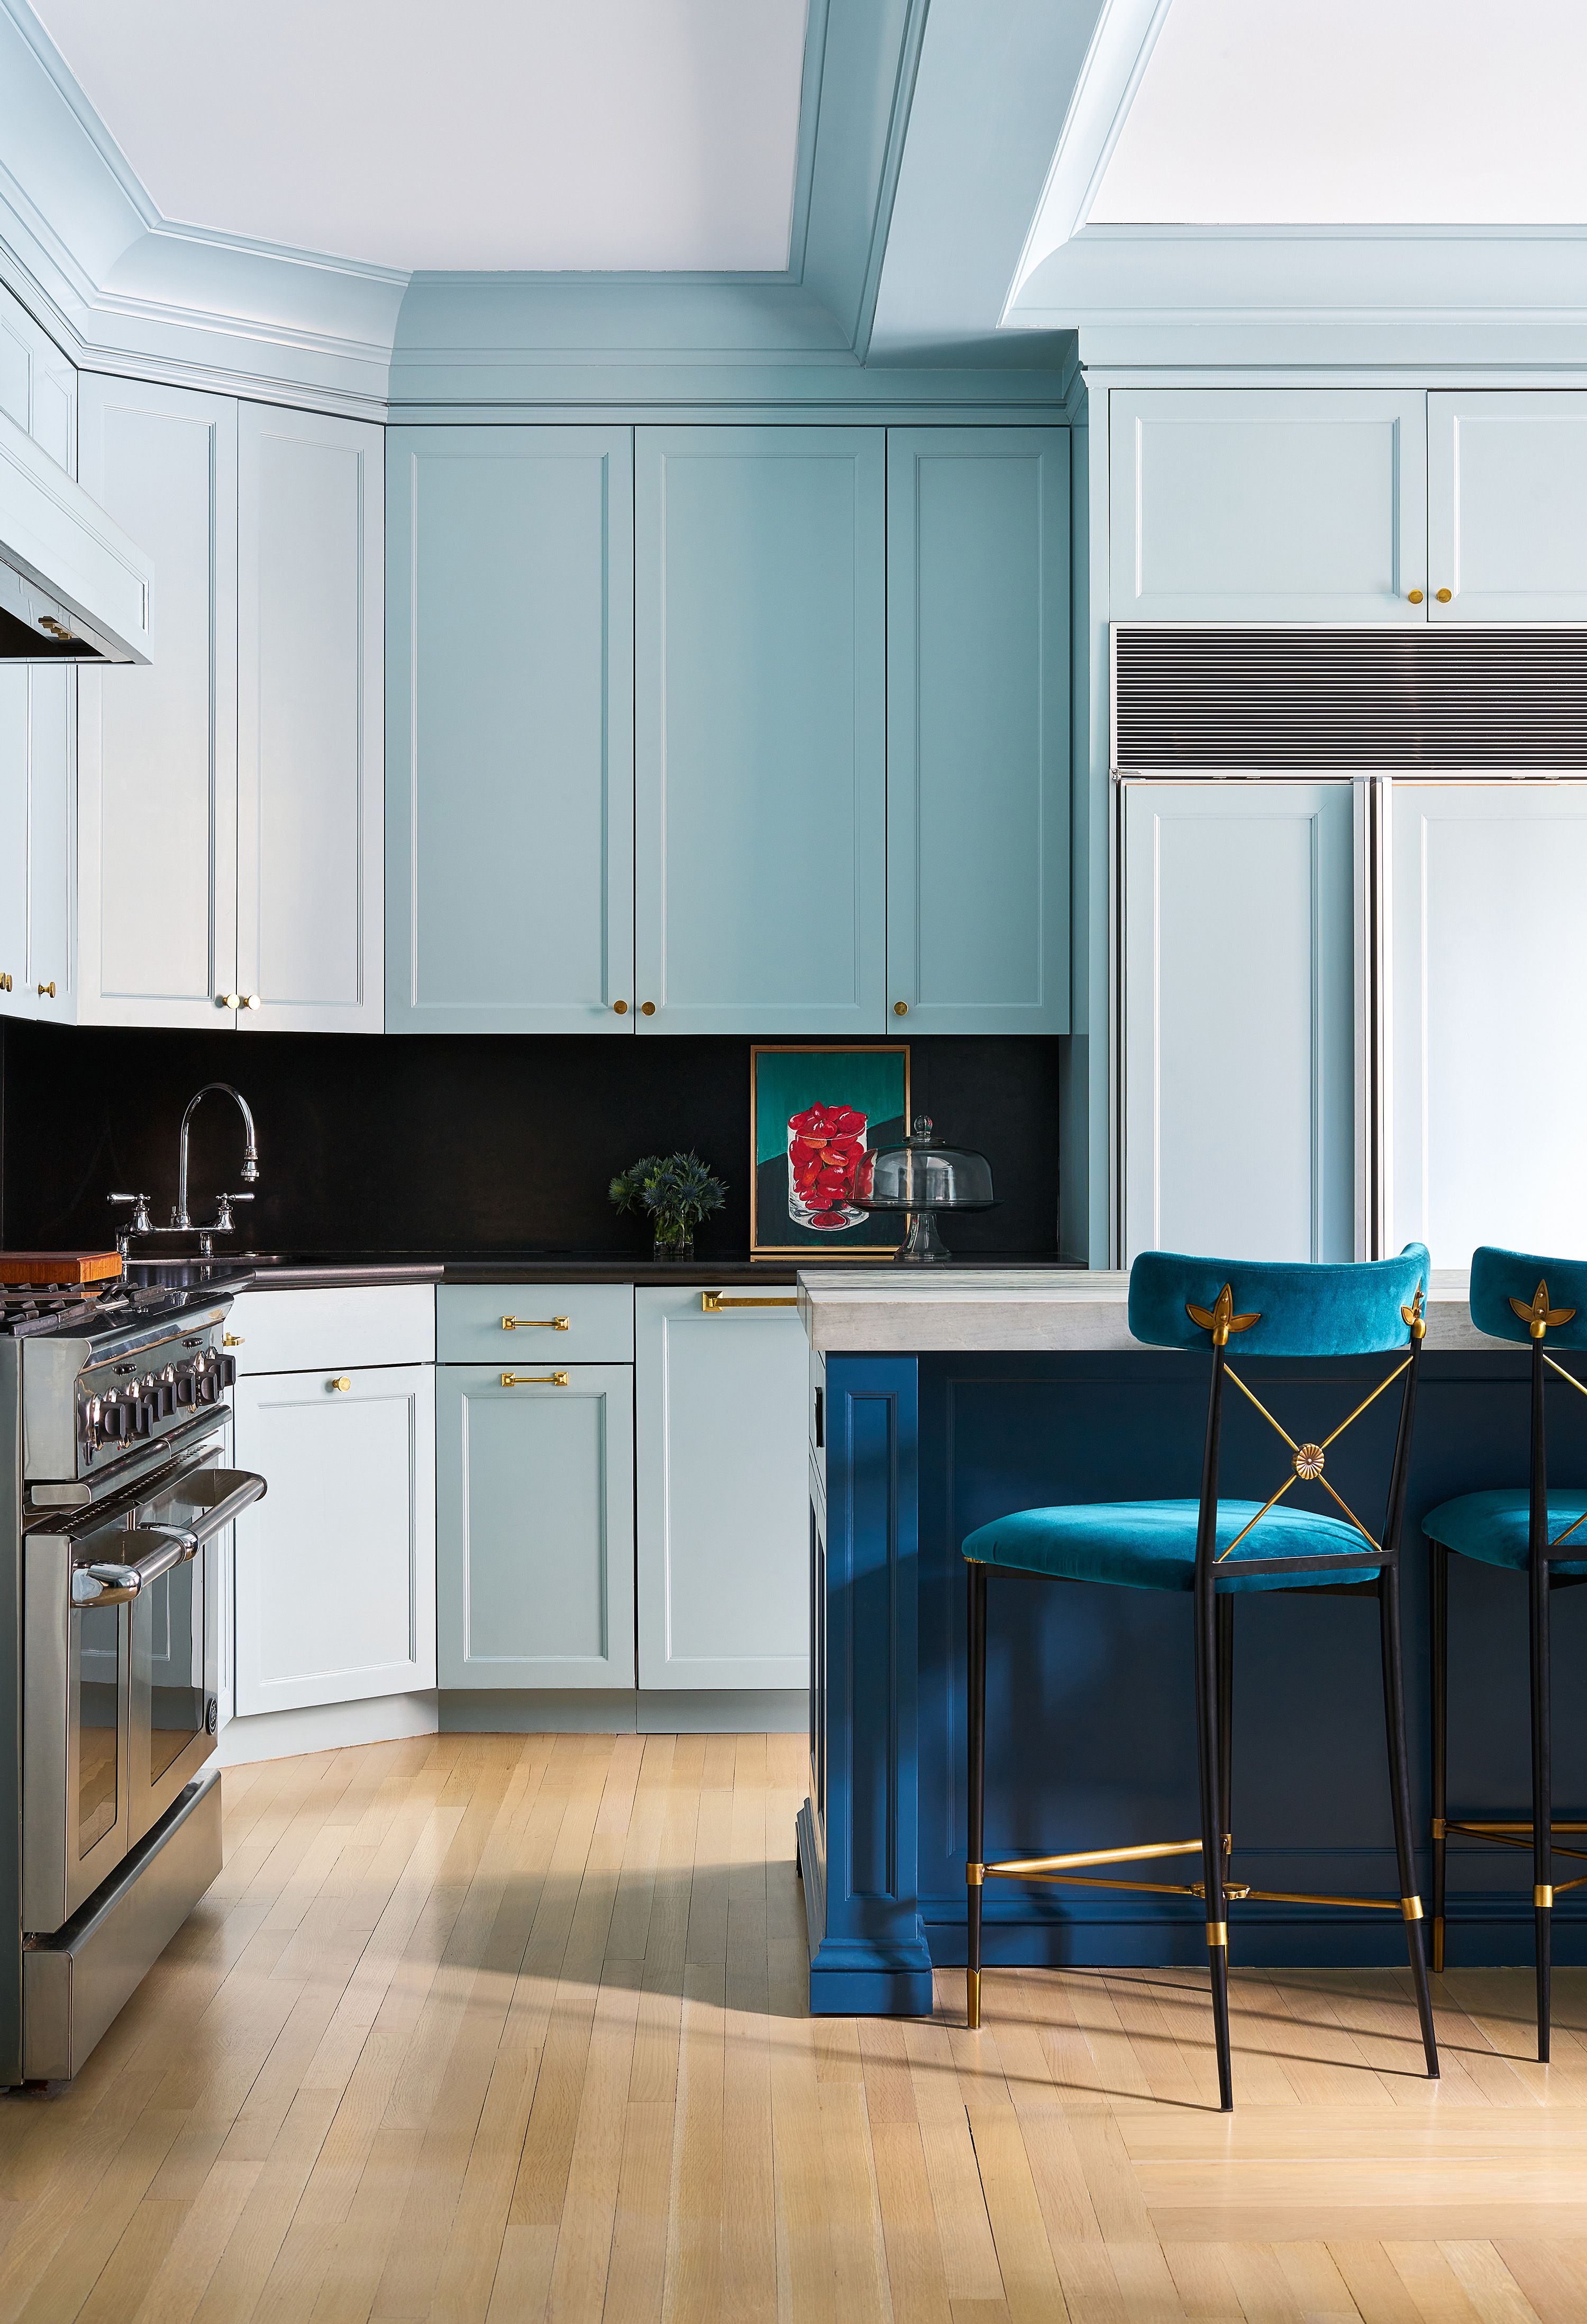 Which Backsplash Tile is Best for your Kitchen or Bathroom?